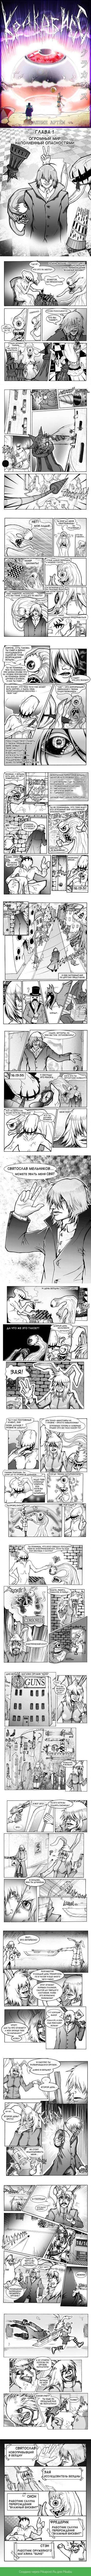 Manga-comic Krakabiss 1 chapter (0-19 pages) - My, Comics, Manga, , , Humor, Sonen, Fantasy, Longpost